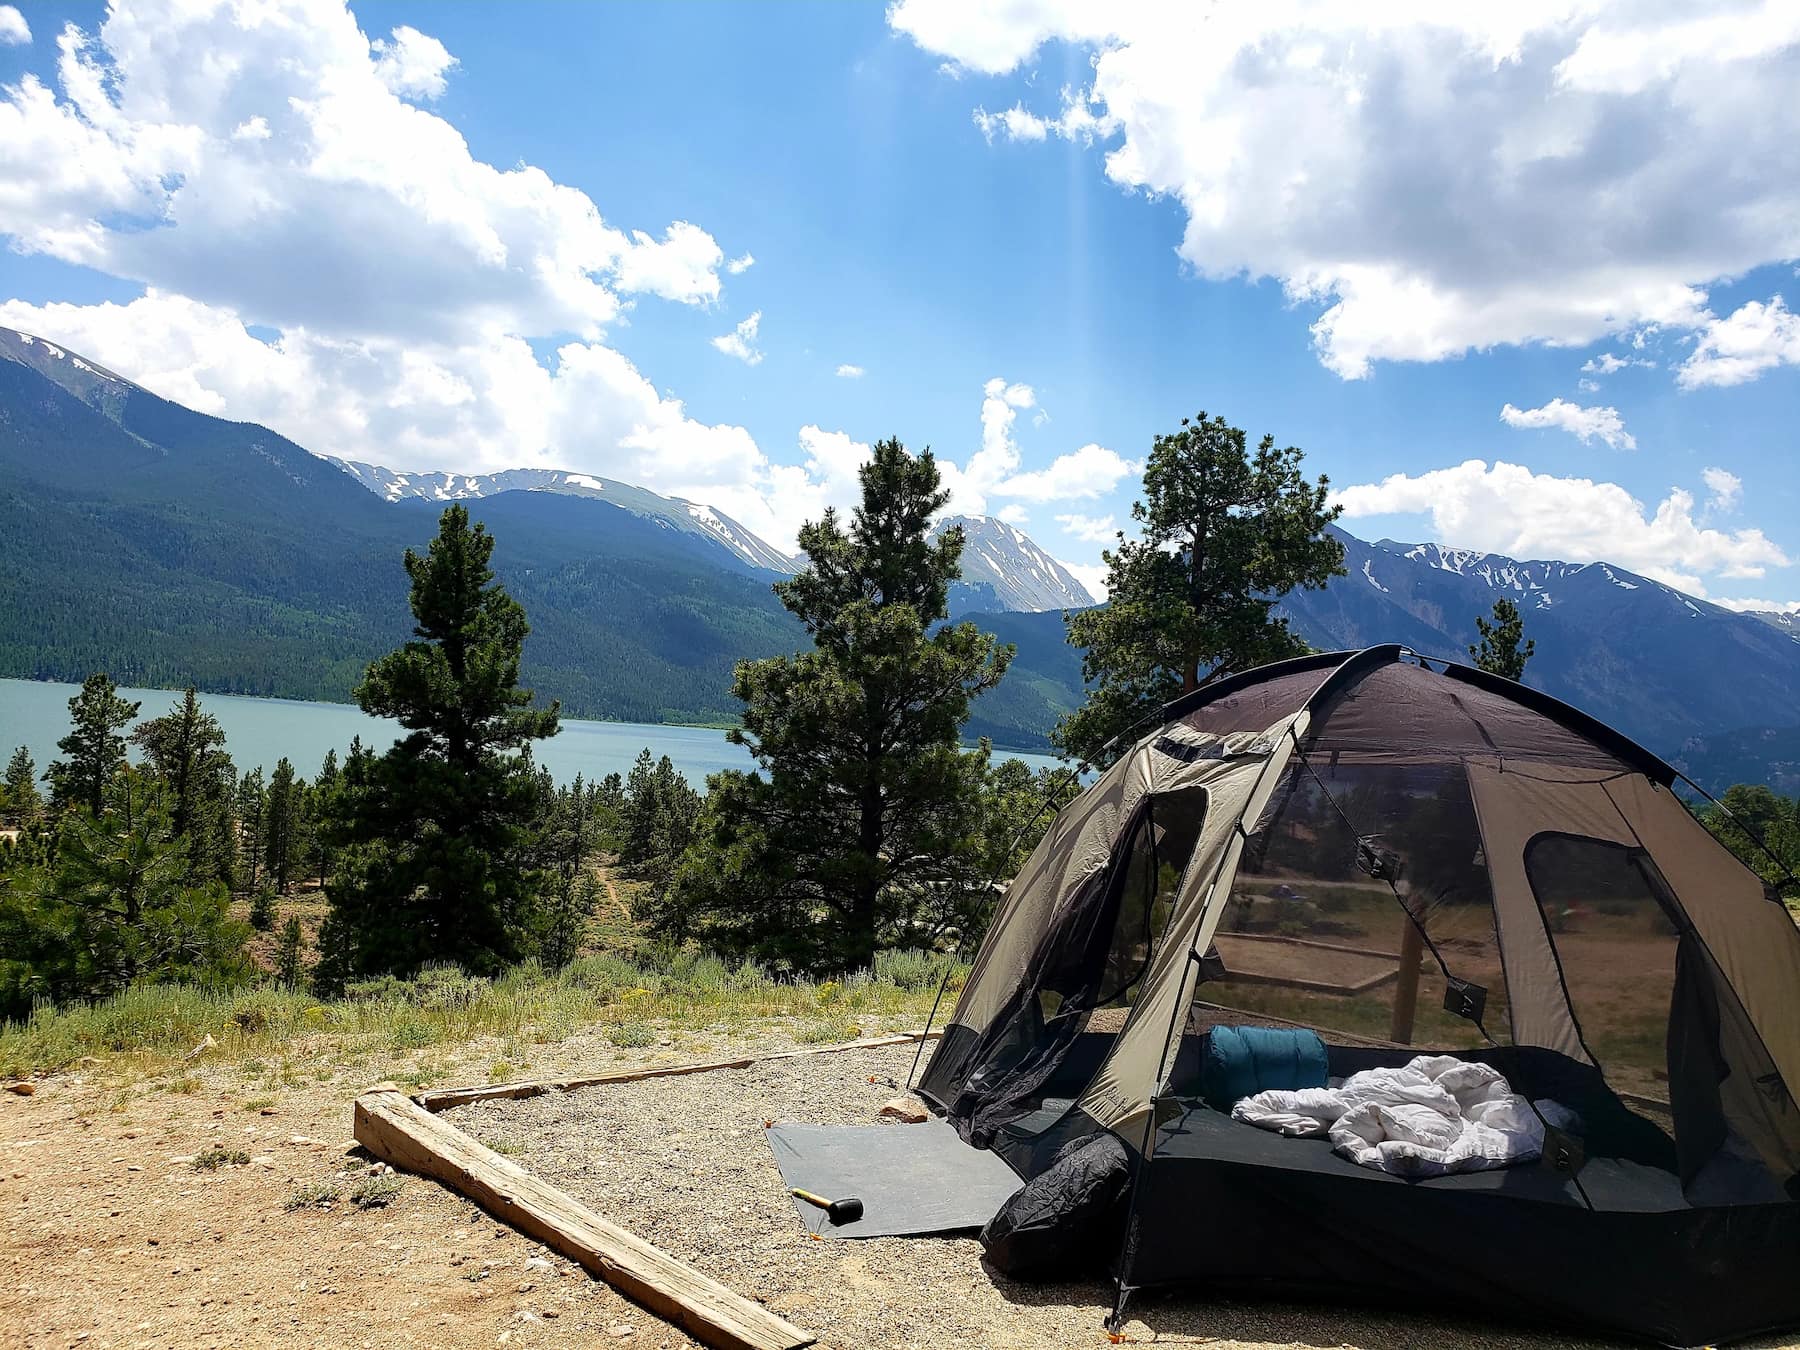 Tent on a platform beside the lake beneath a mountainous landscape.